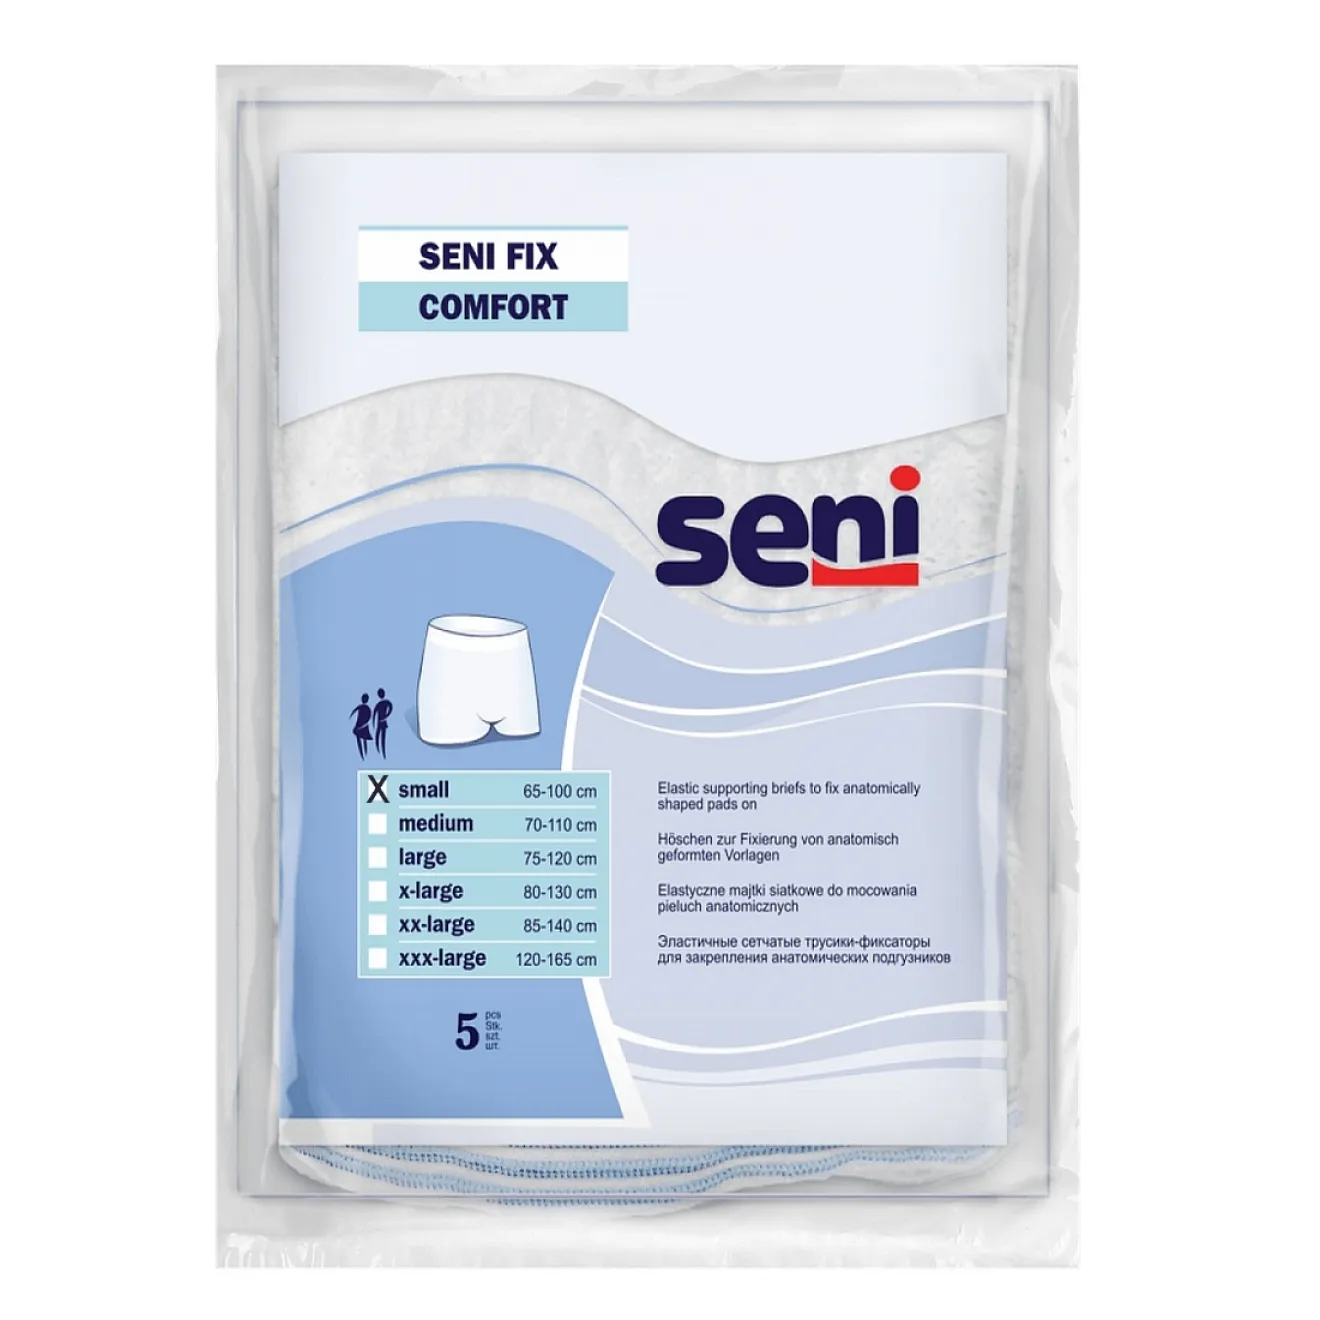 SENI Fix Comfort Fixierhosen Gr. Small 5 ST